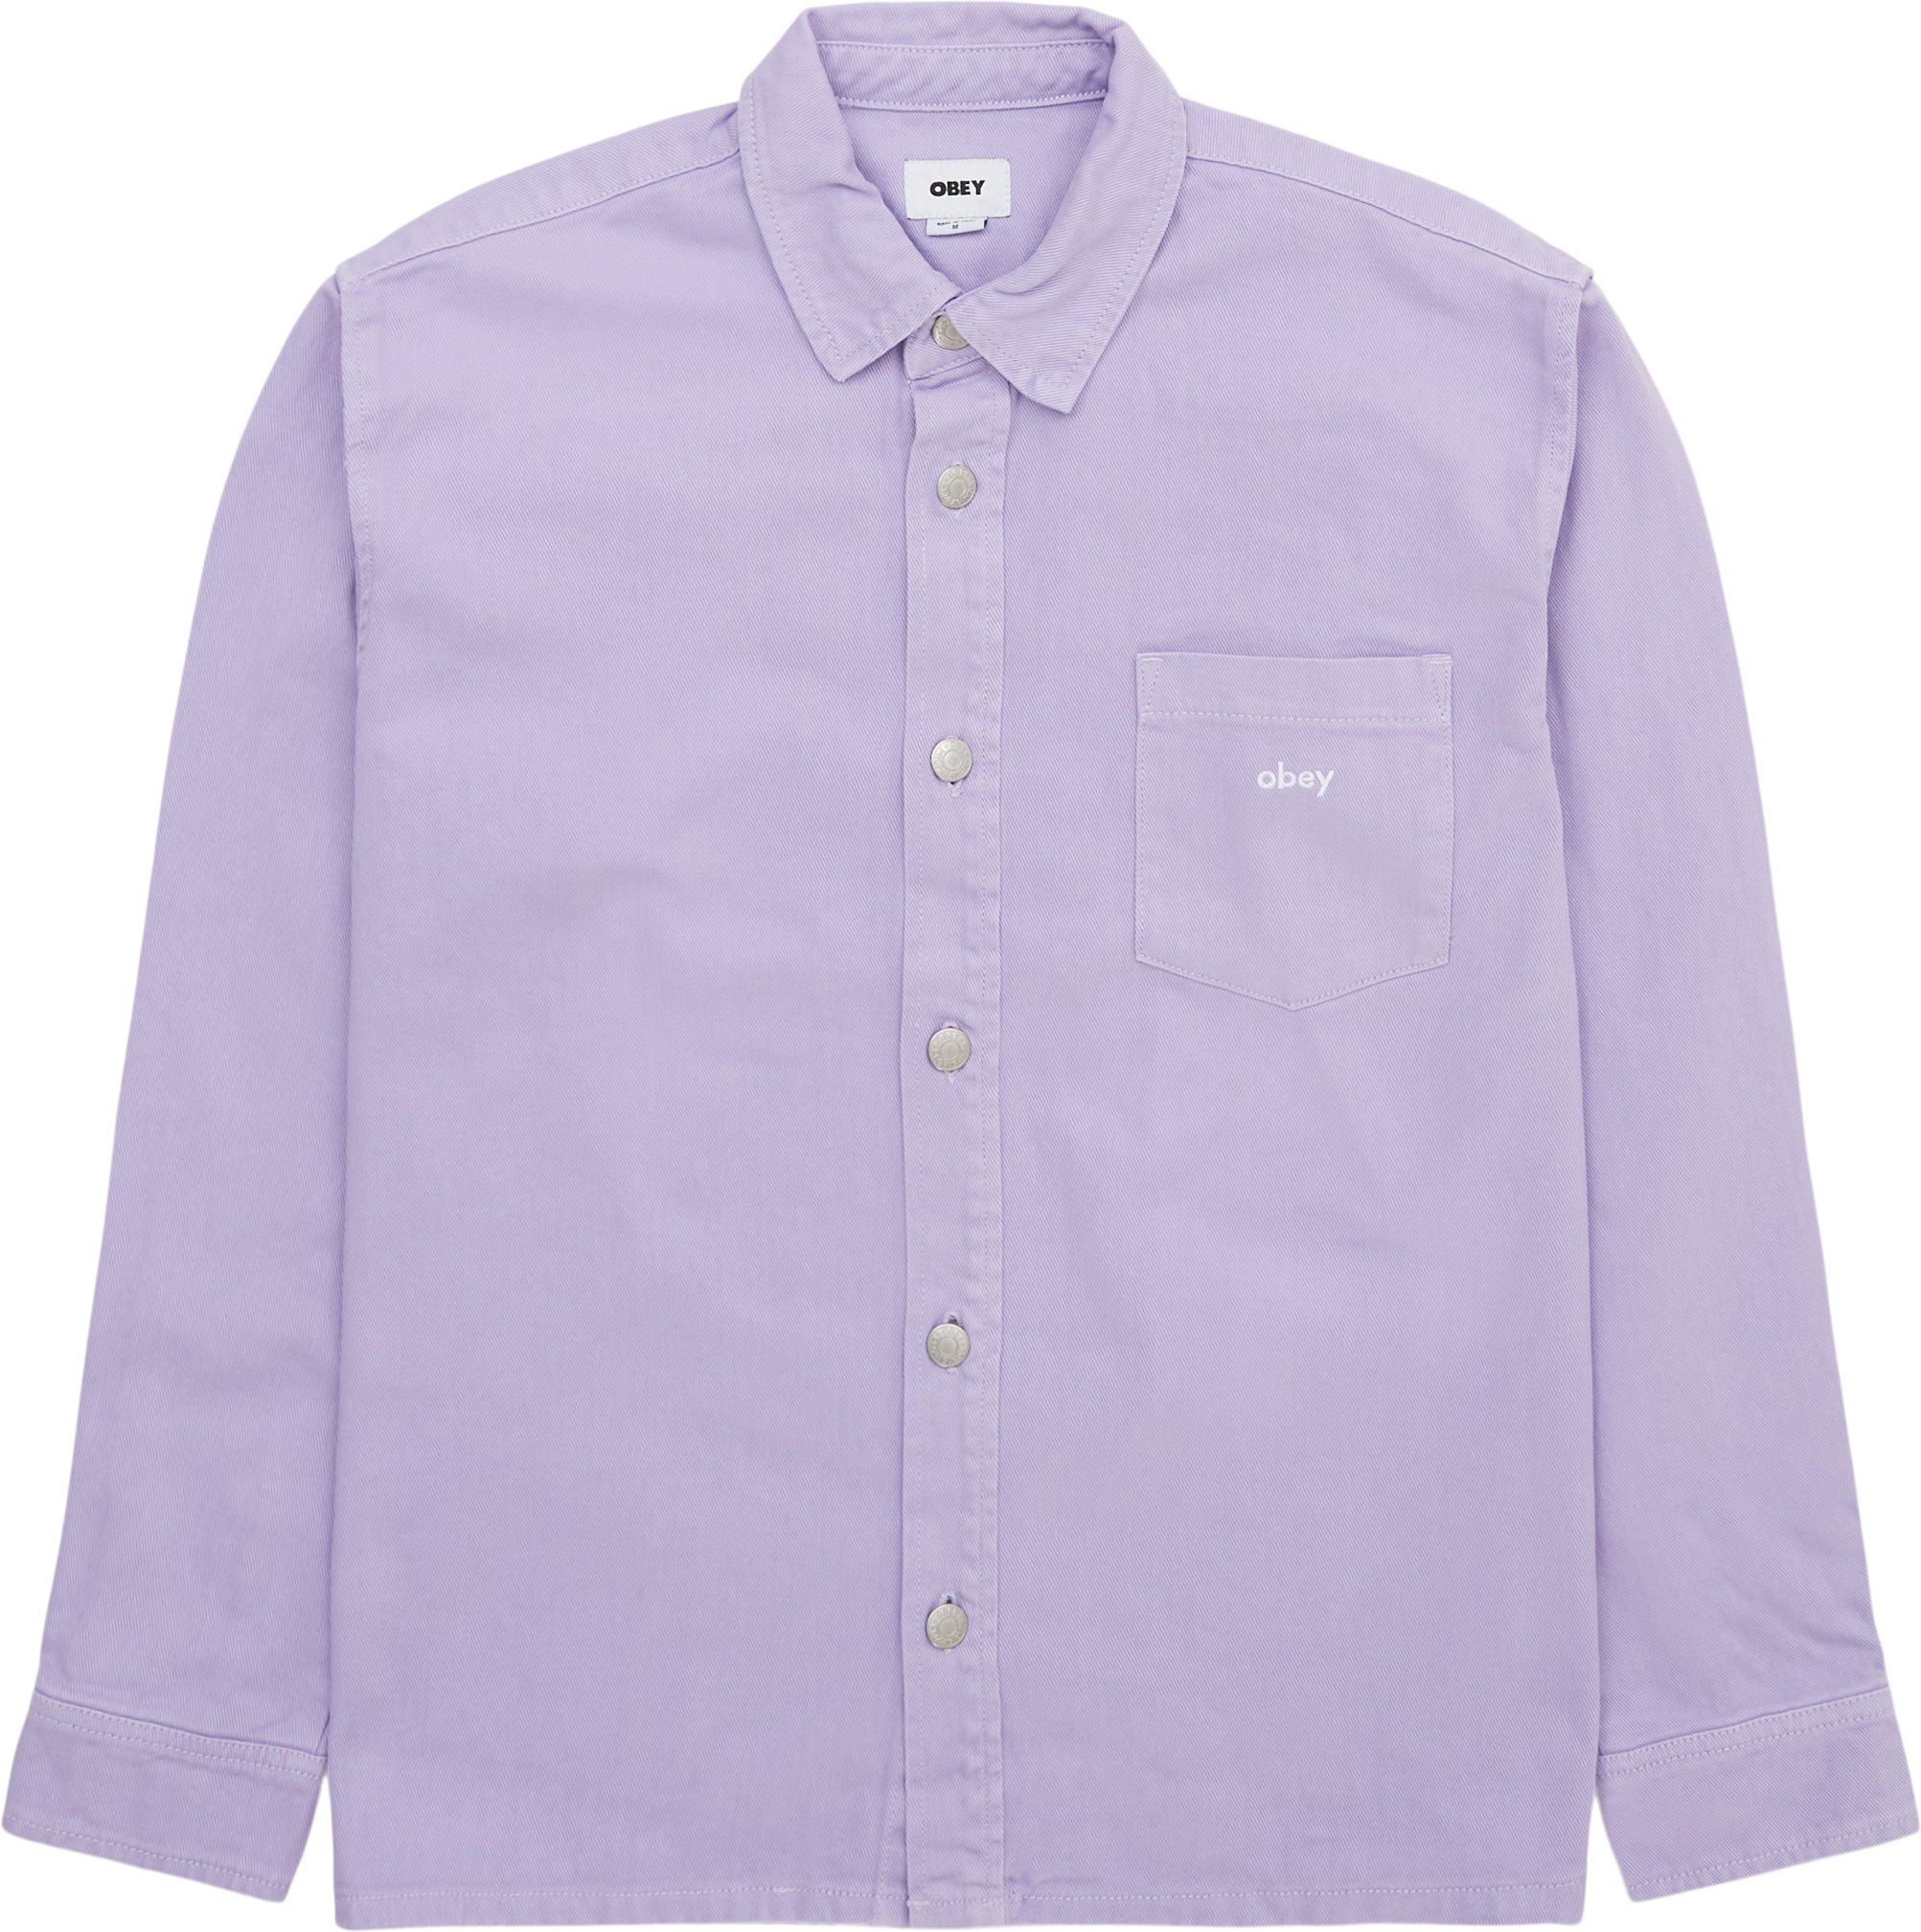 Obey Shirts MAGNOLIA SHIRT 181200367 Lilac